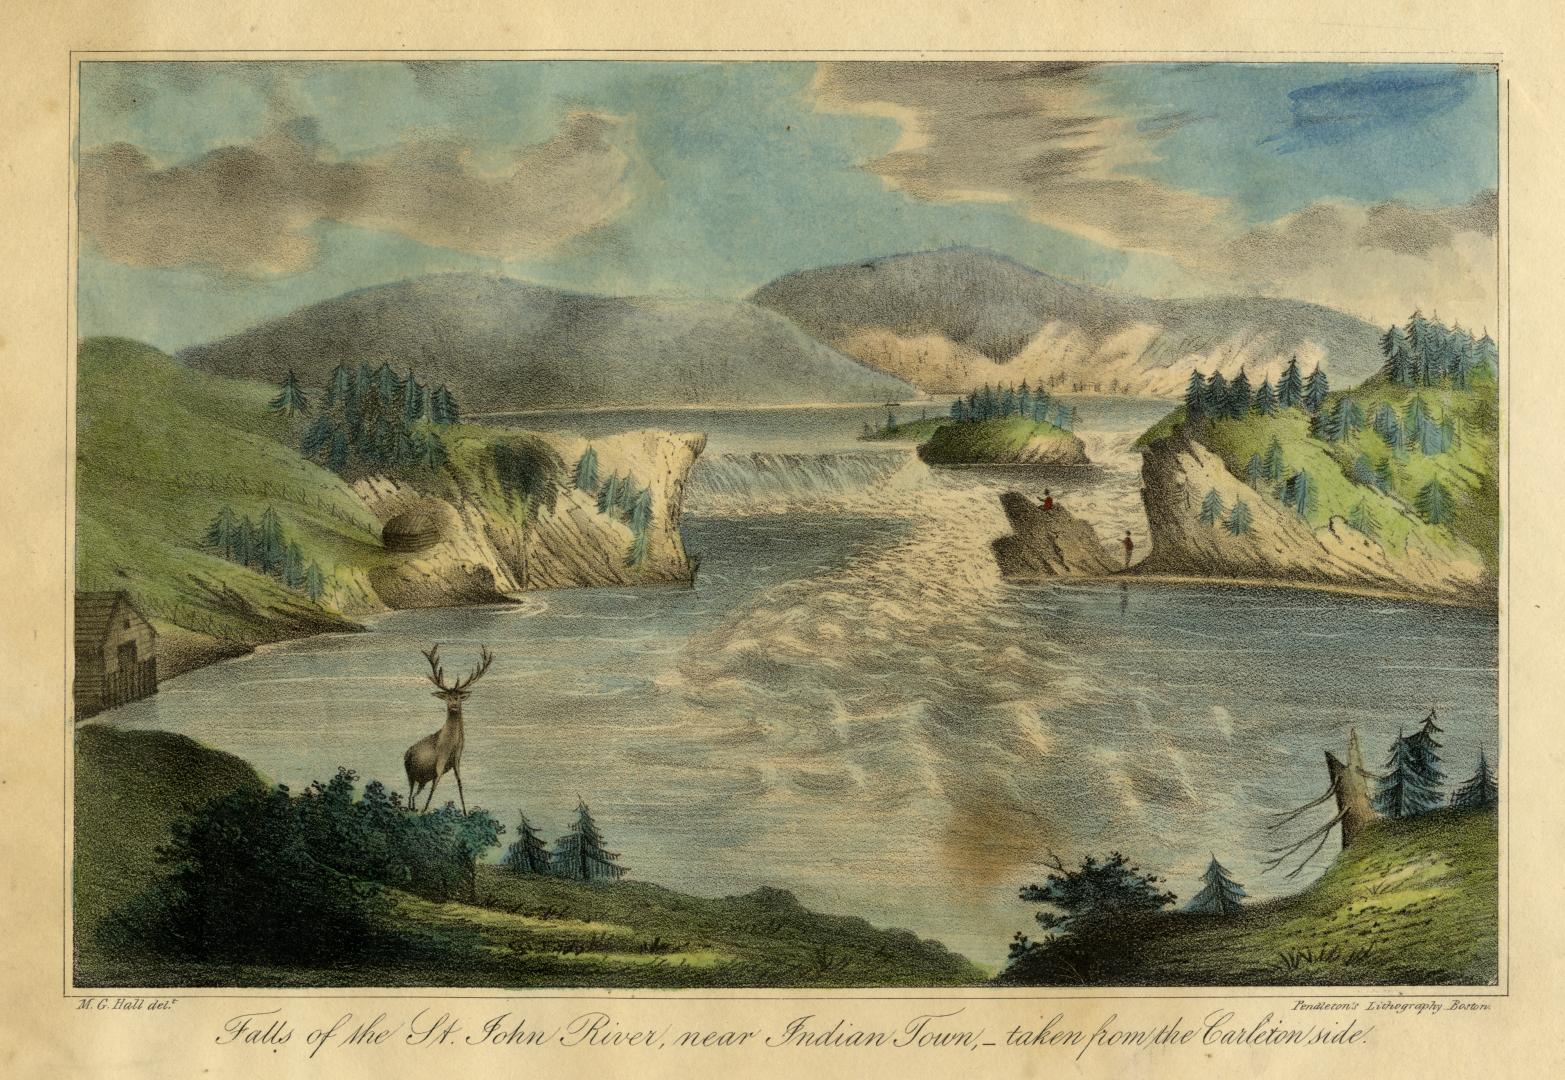 Falls of the St. John River, near Indian Town, Taken from the Carleton Side, St. John, New Brunswick